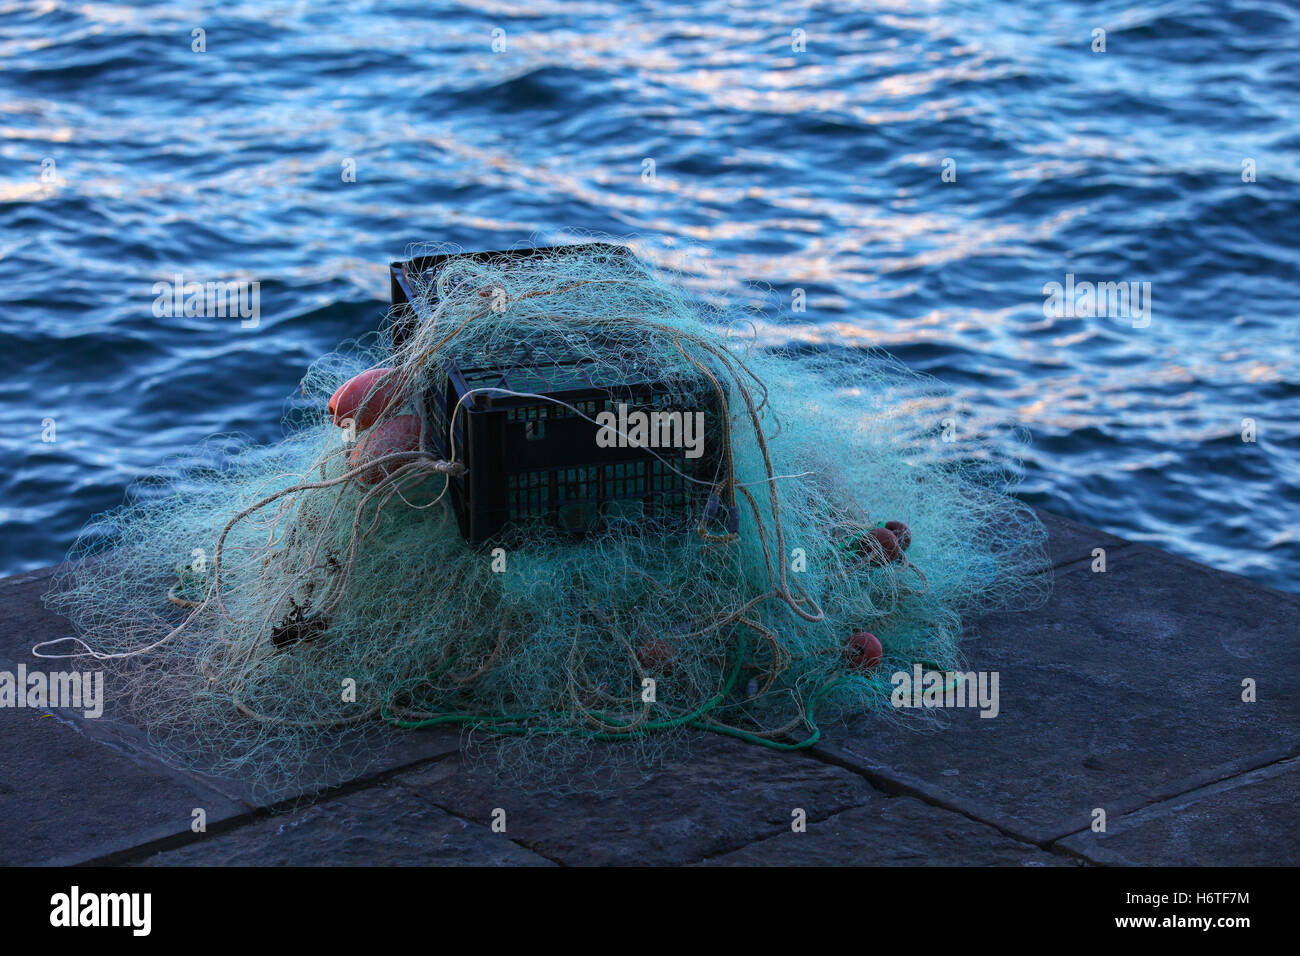 https://c8.alamy.com/comp/H6TF7M/plastic-box-full-of-red-white-fishing-net-huge-floats-nylon-rope-used-H6TF7M.jpg